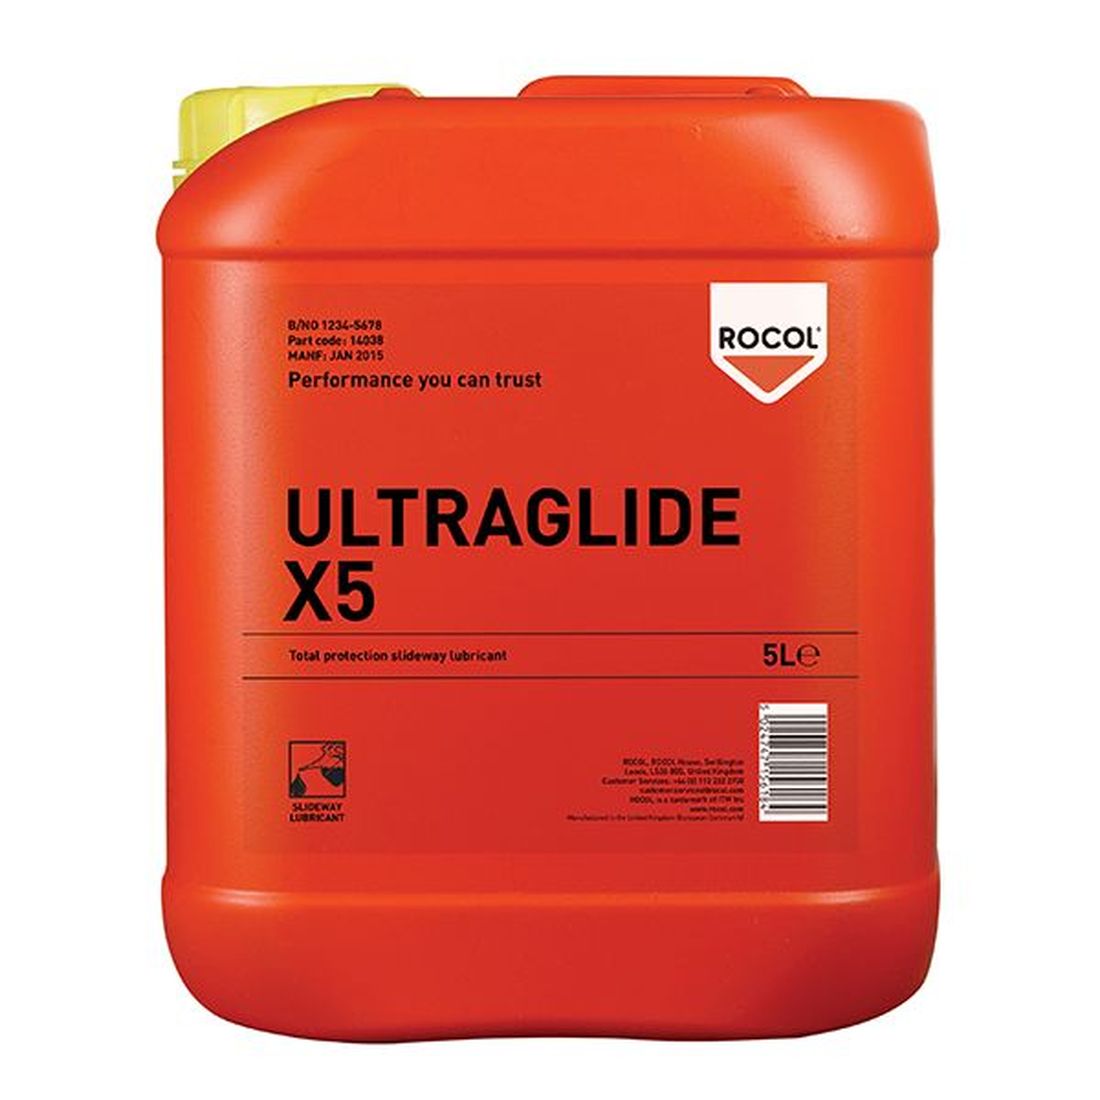 ROCOL ULTRAGLIDE X5 Lubricant 5 litre   